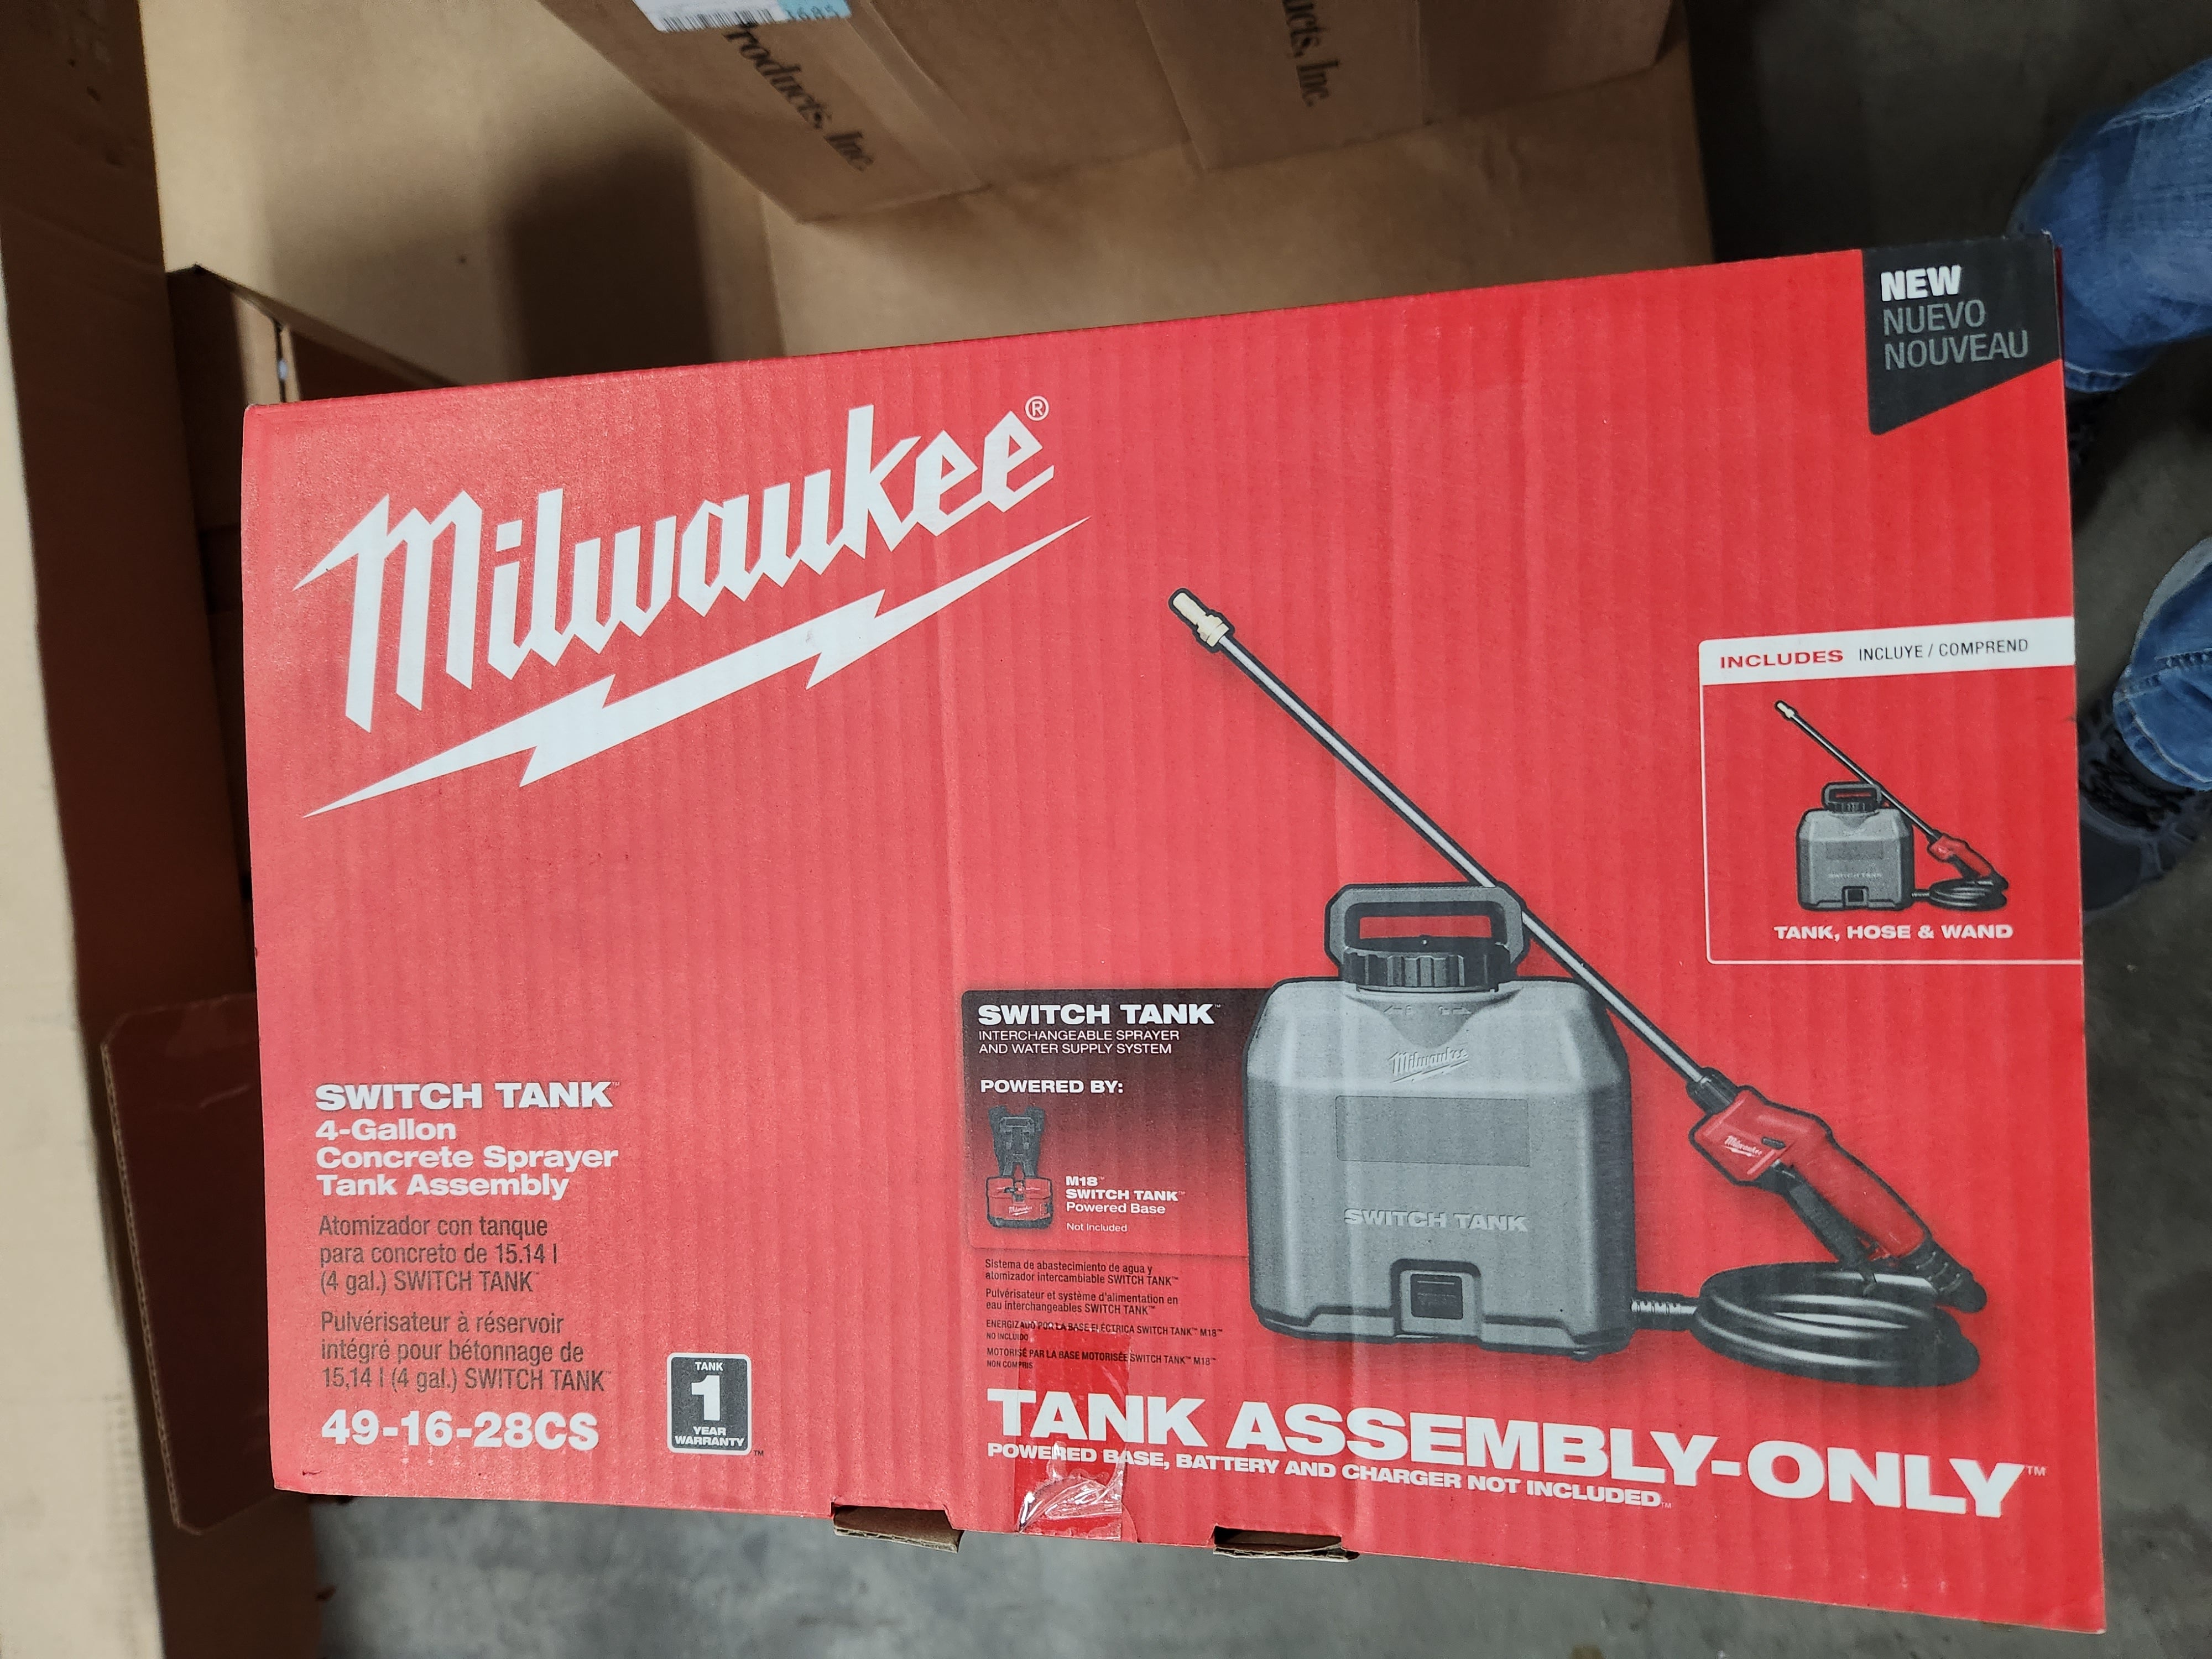 Milwaukee SWITCH TANK™ 4- Gallon Concrete Sprayer Tank Assembly